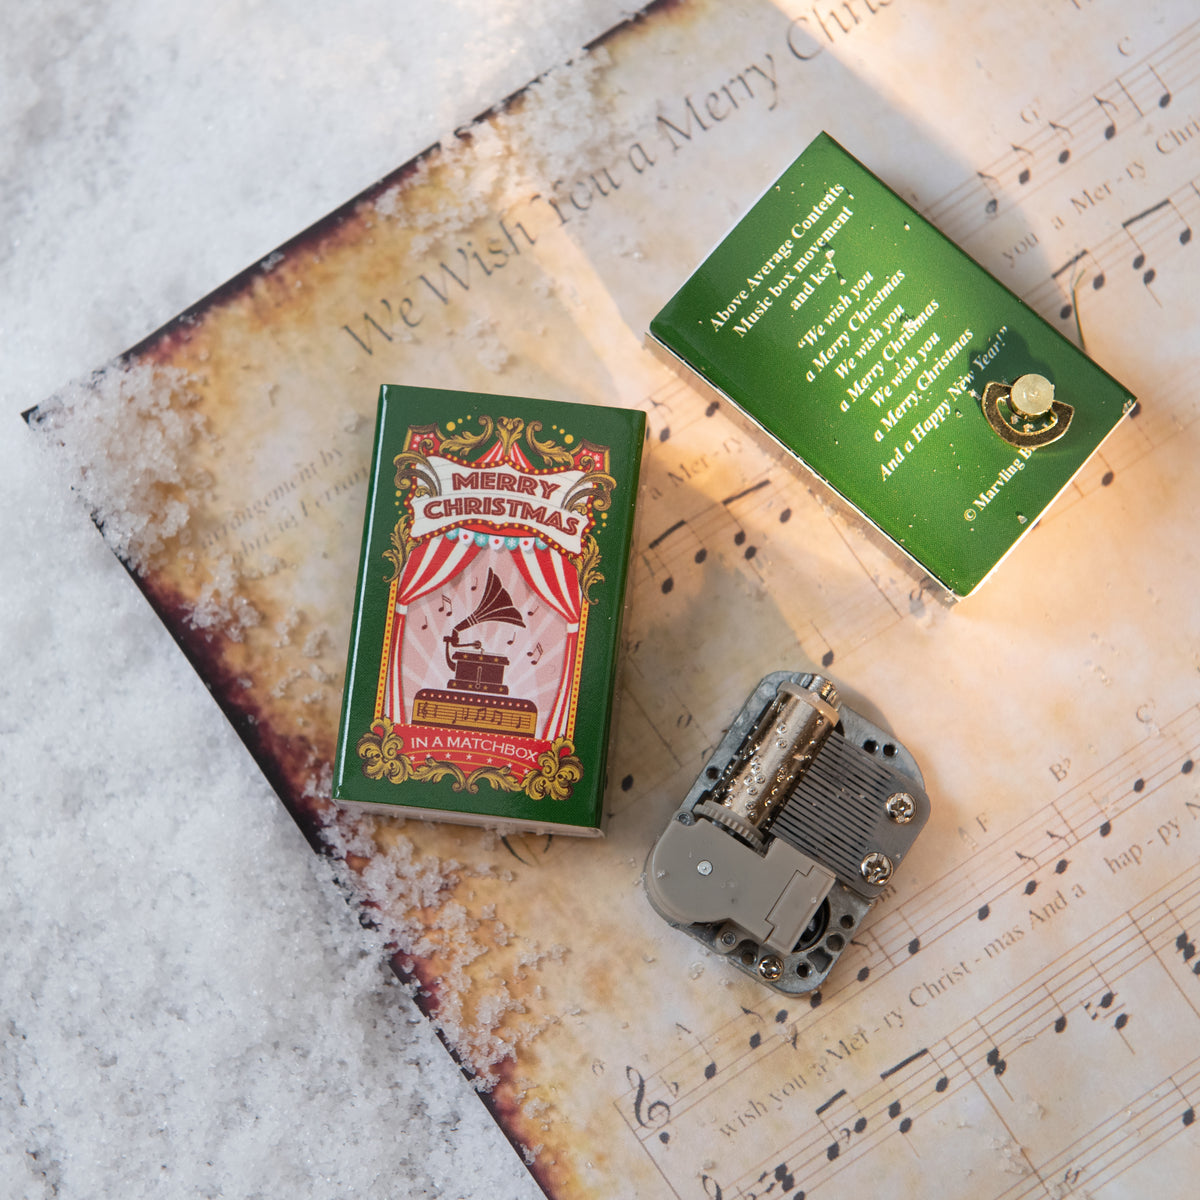 Christmas Music Box Kit In A Matchbox